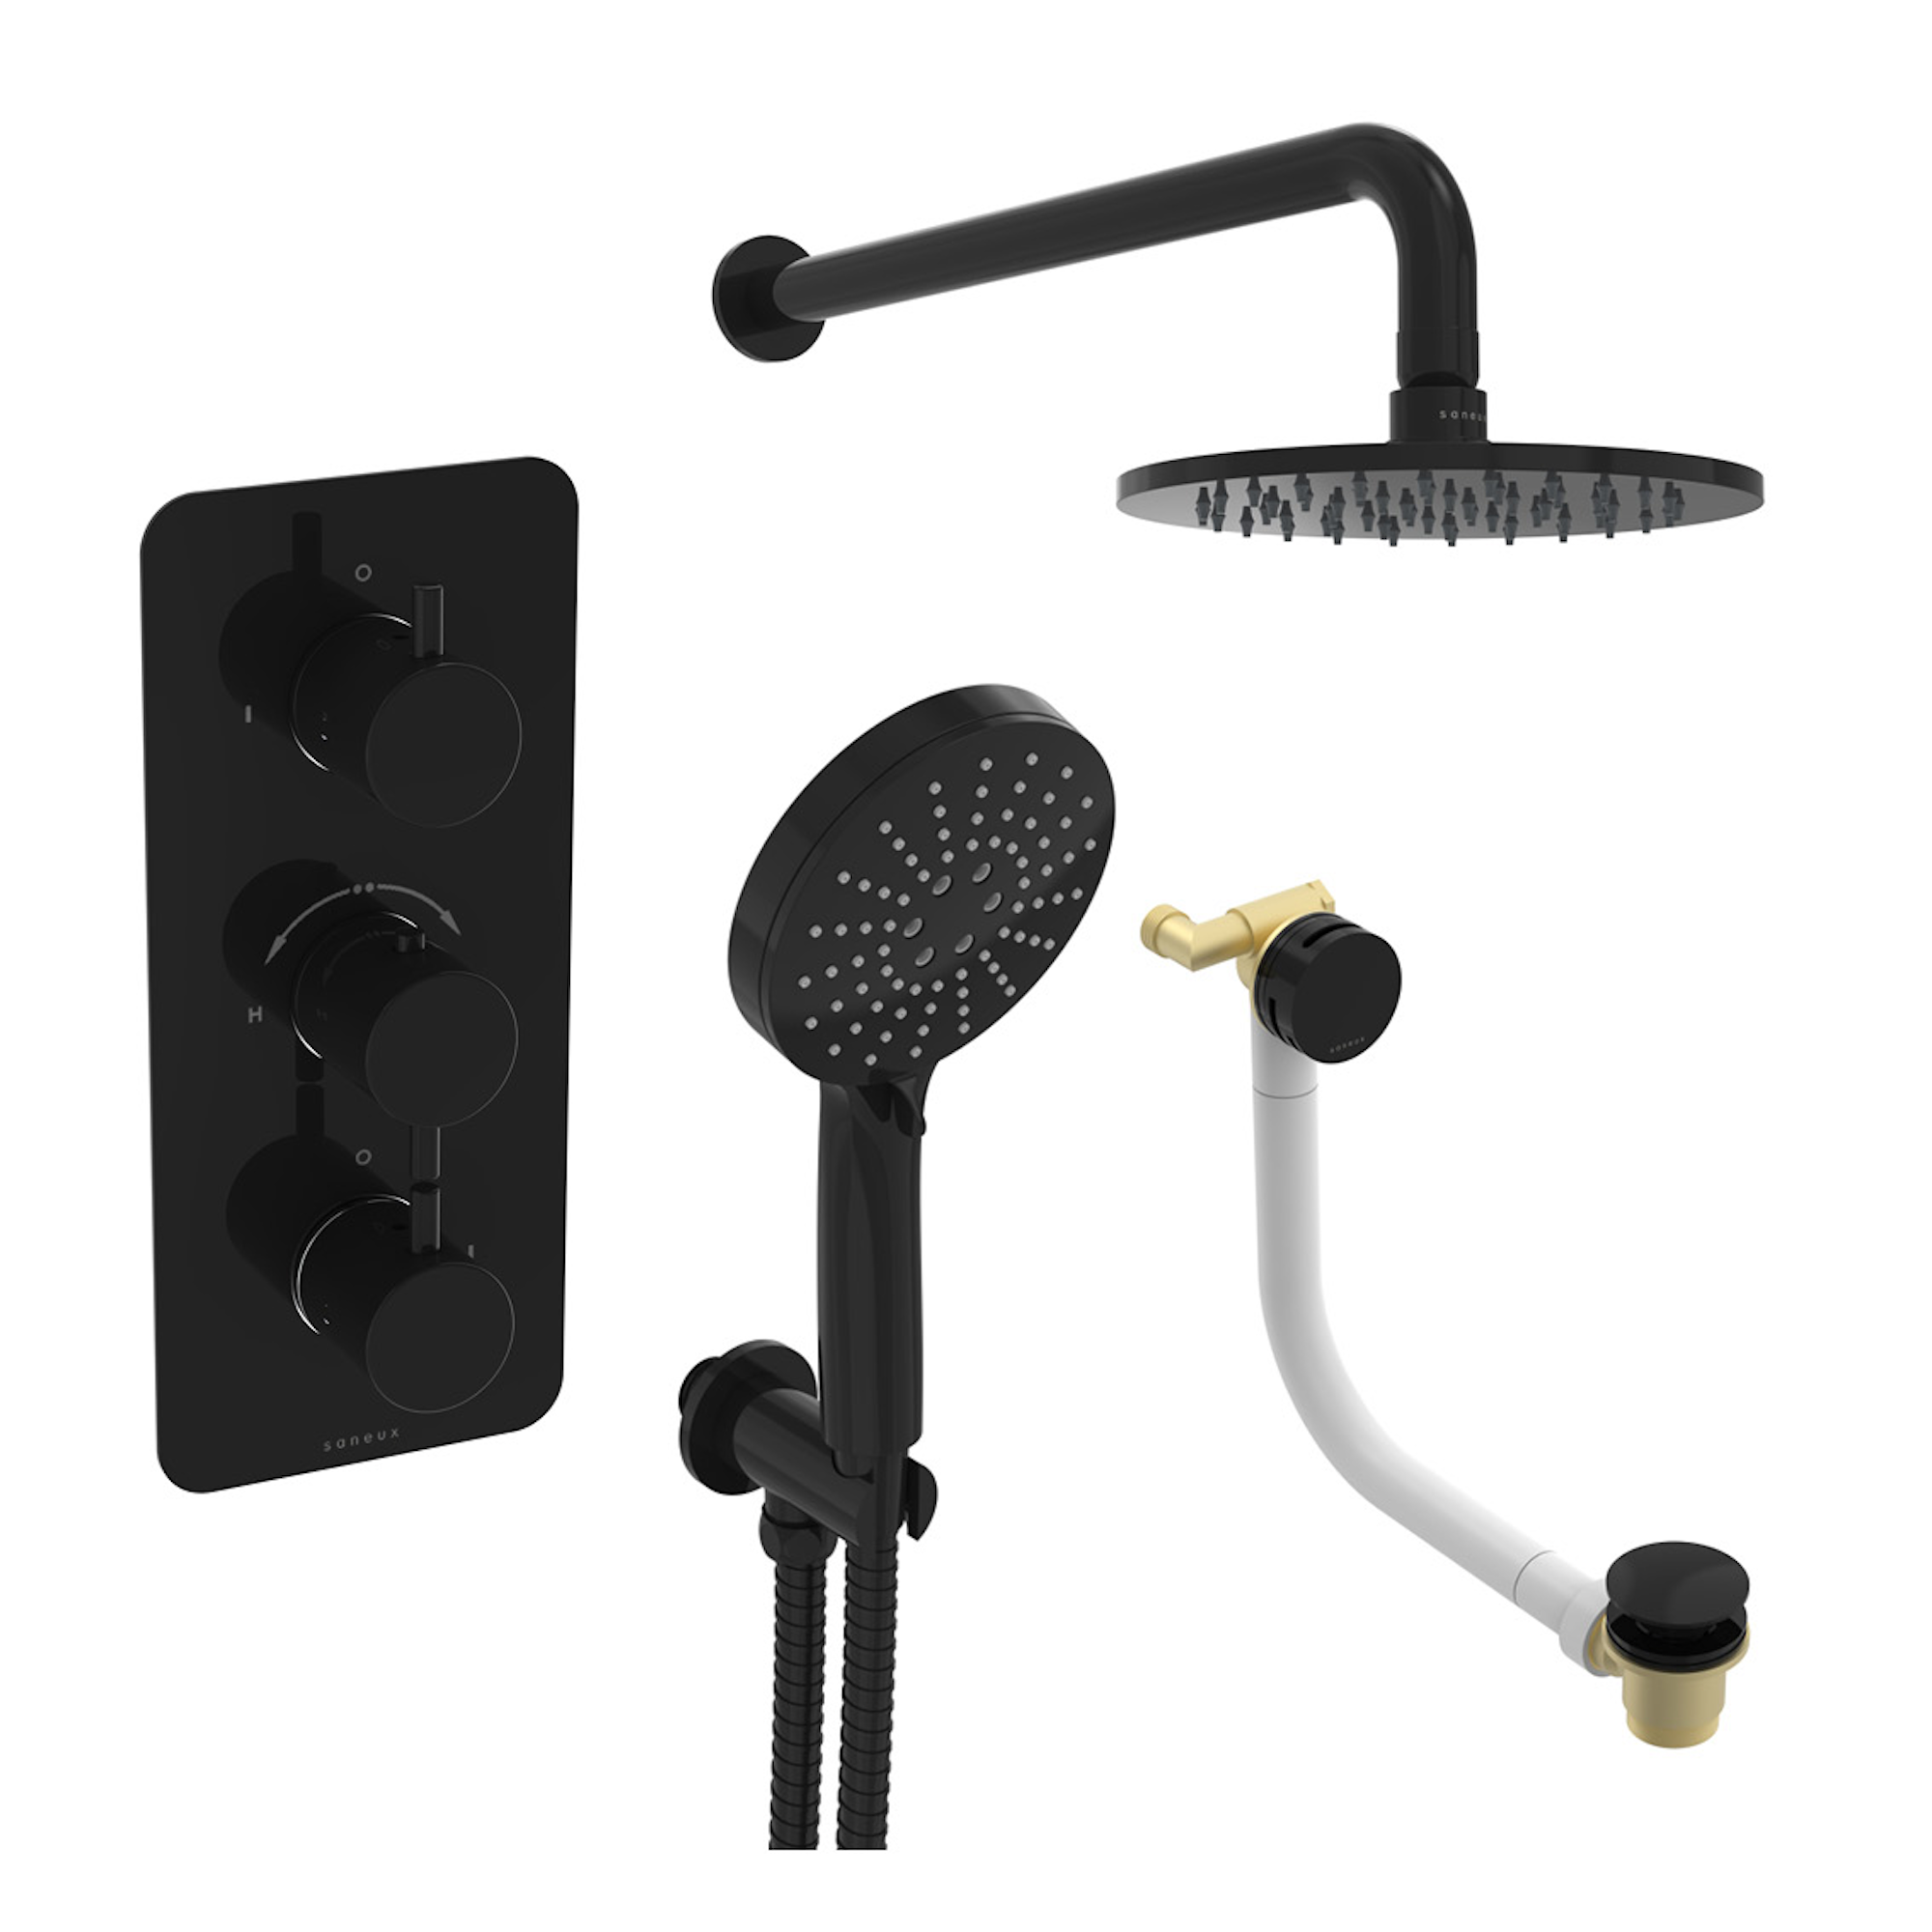 COS 3 way shower kit - w/ 3 Function Handset & Bath filler & Shower Head - Satin Black